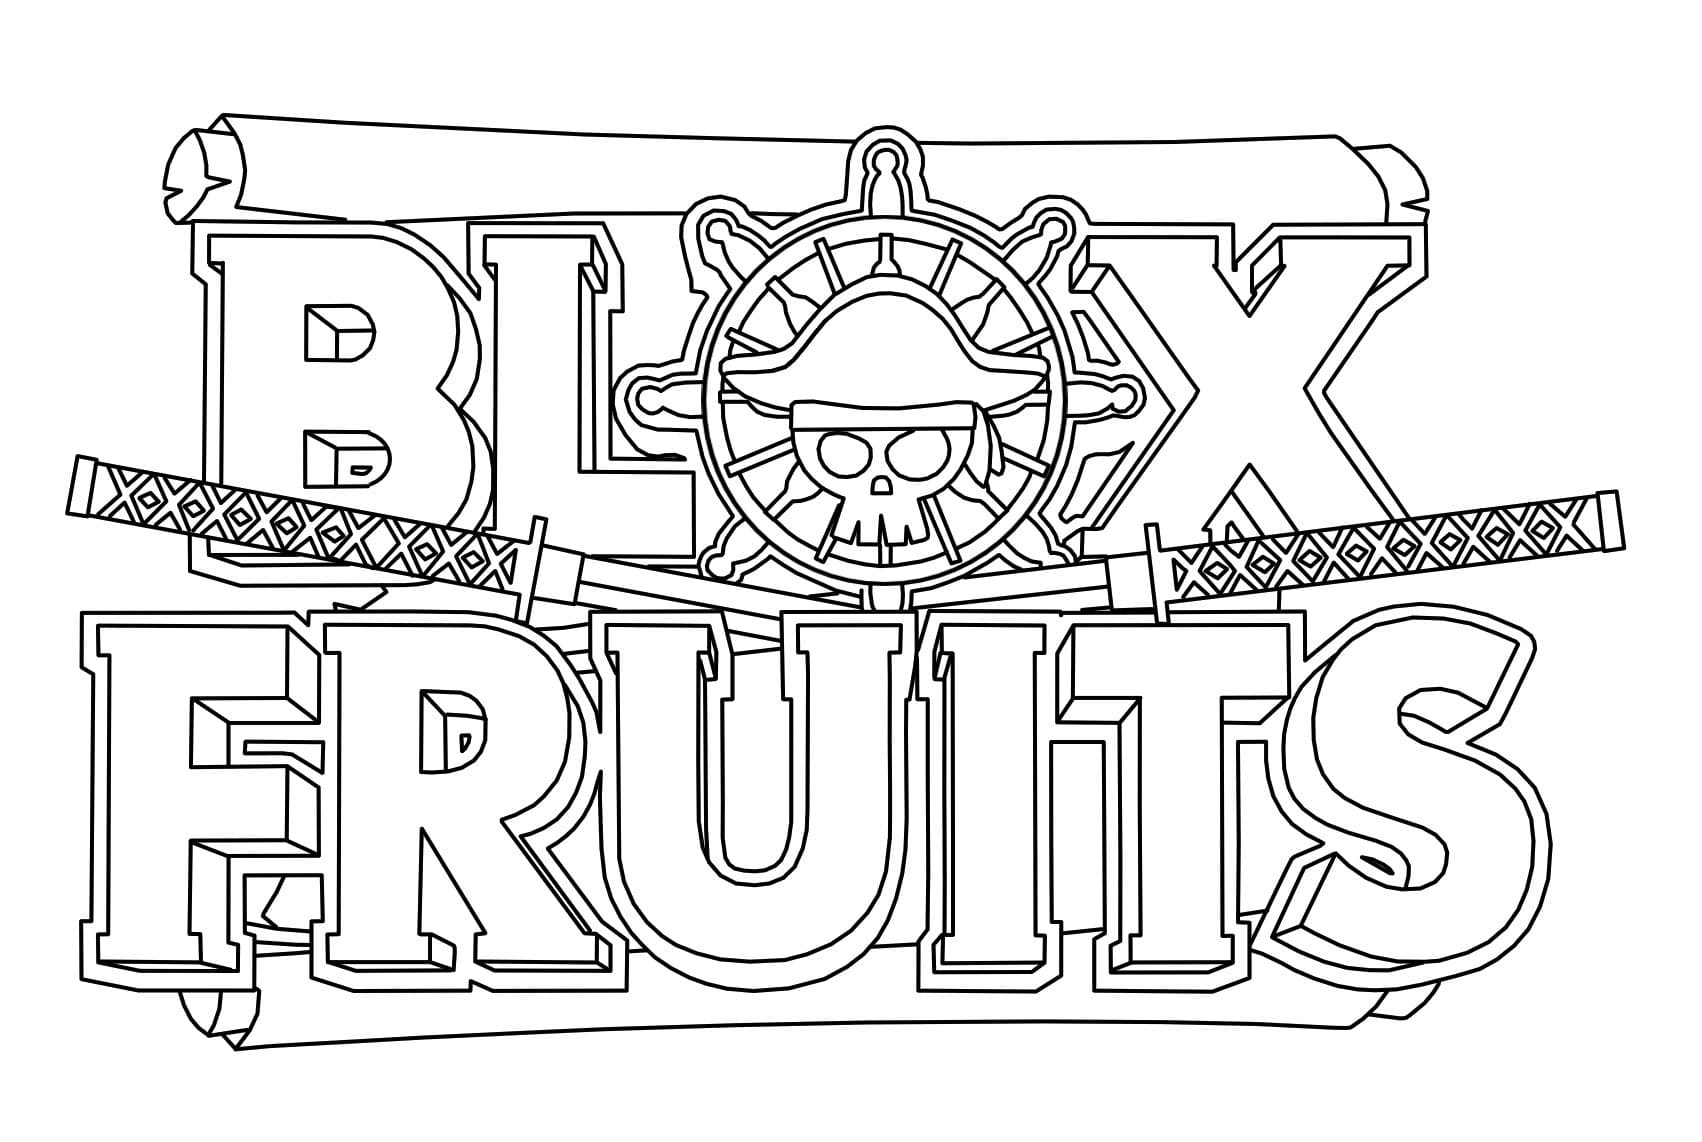 Blox Fruits coloring pages - ColoringLib